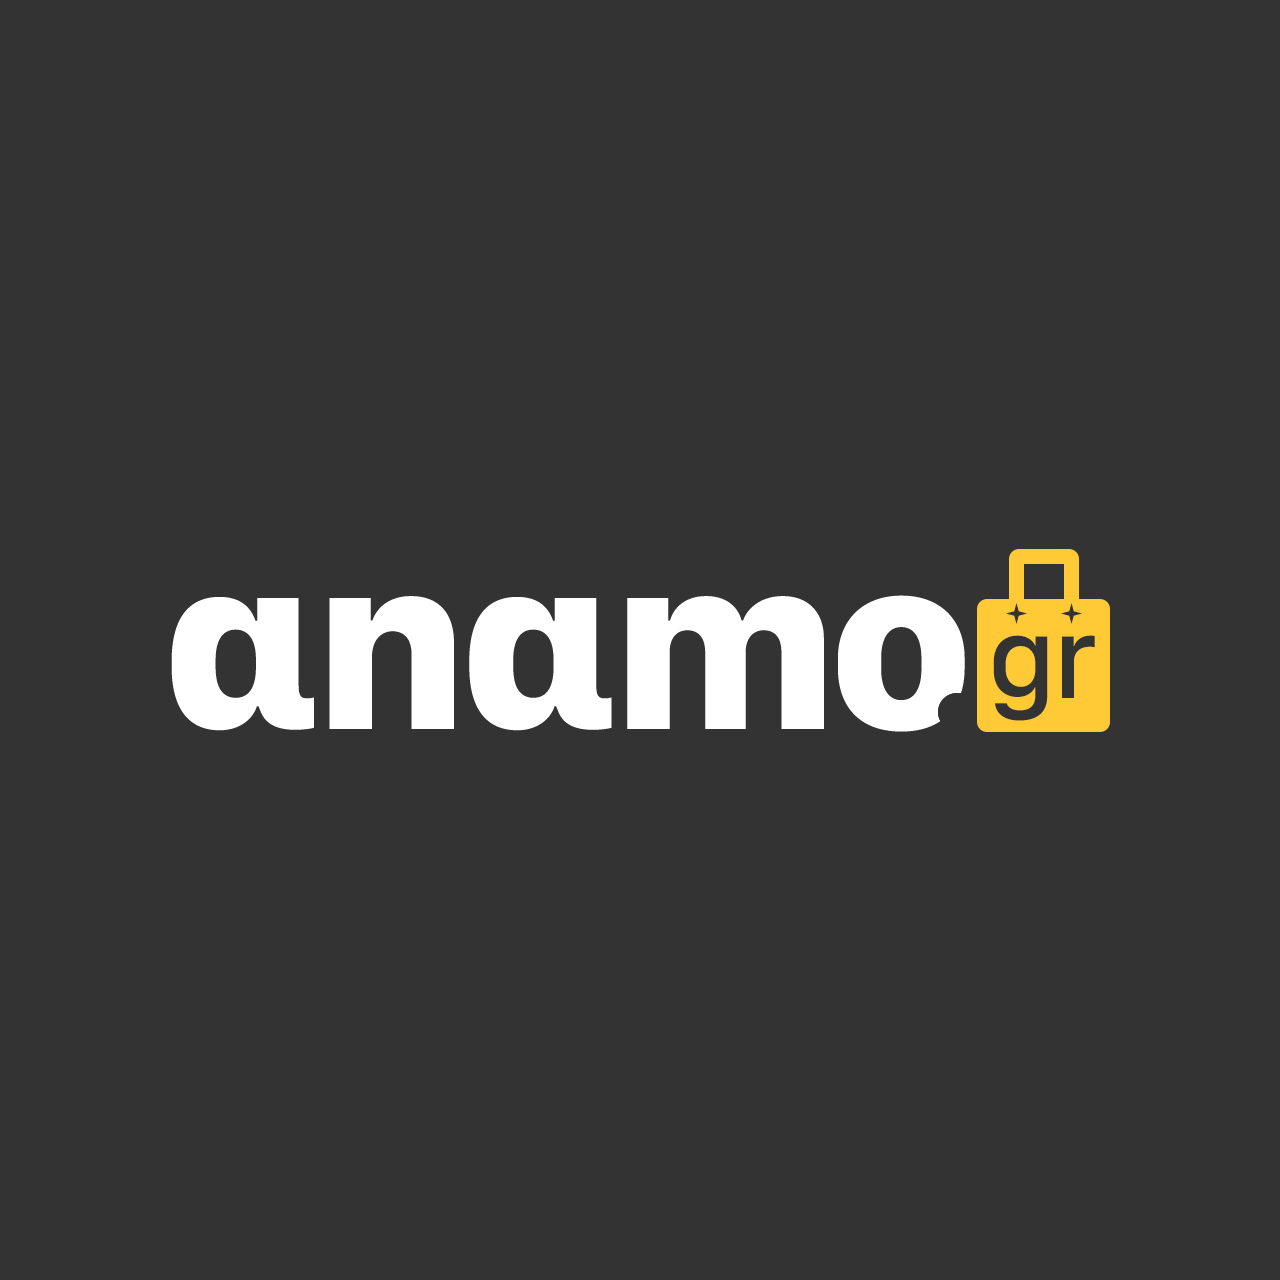 Anamo.gr wordmark (logotype)